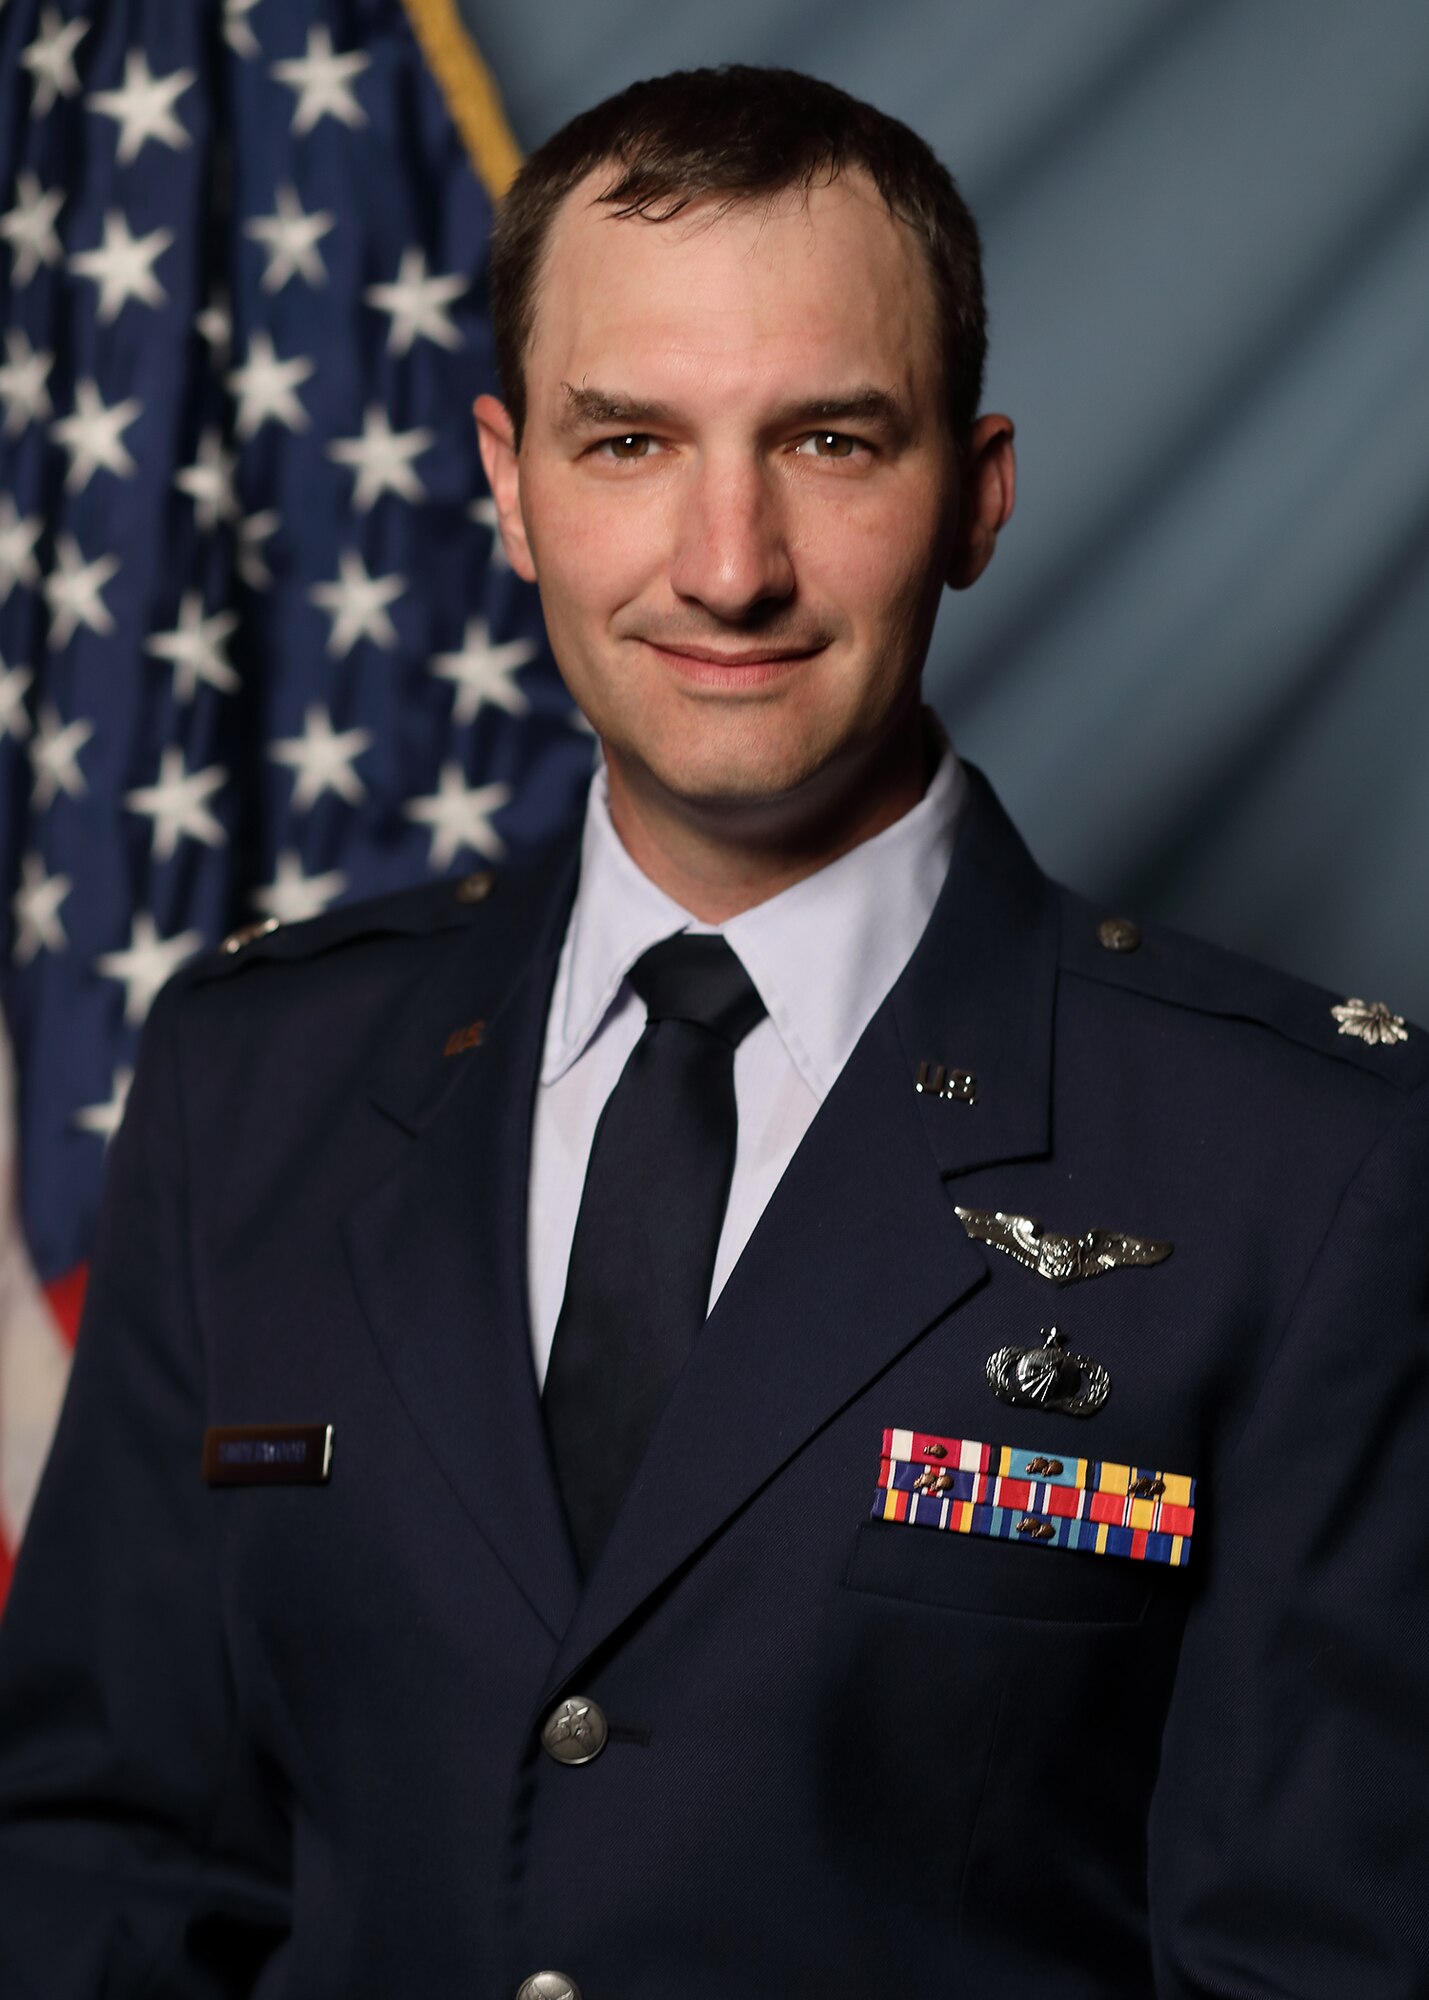 Lt. Col. Roman Underwood